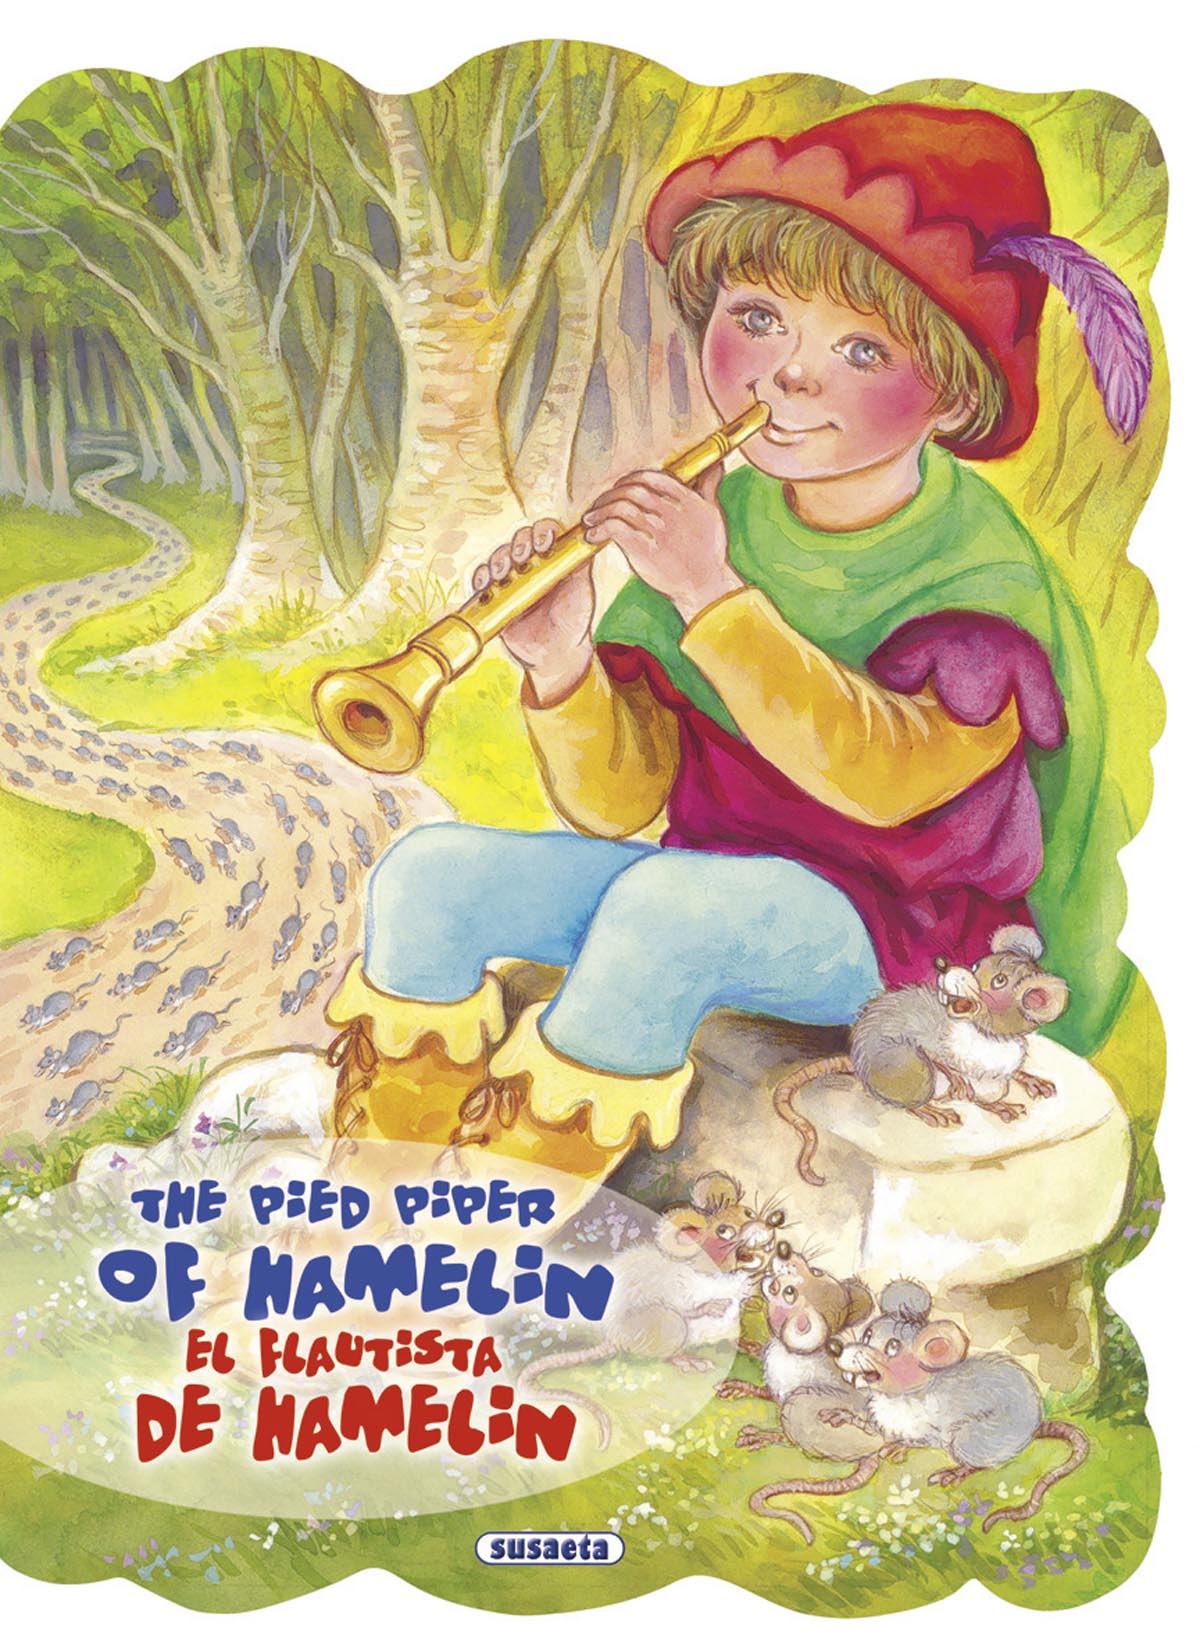 The pied piper of Hamelin - El flautista de Hamelin